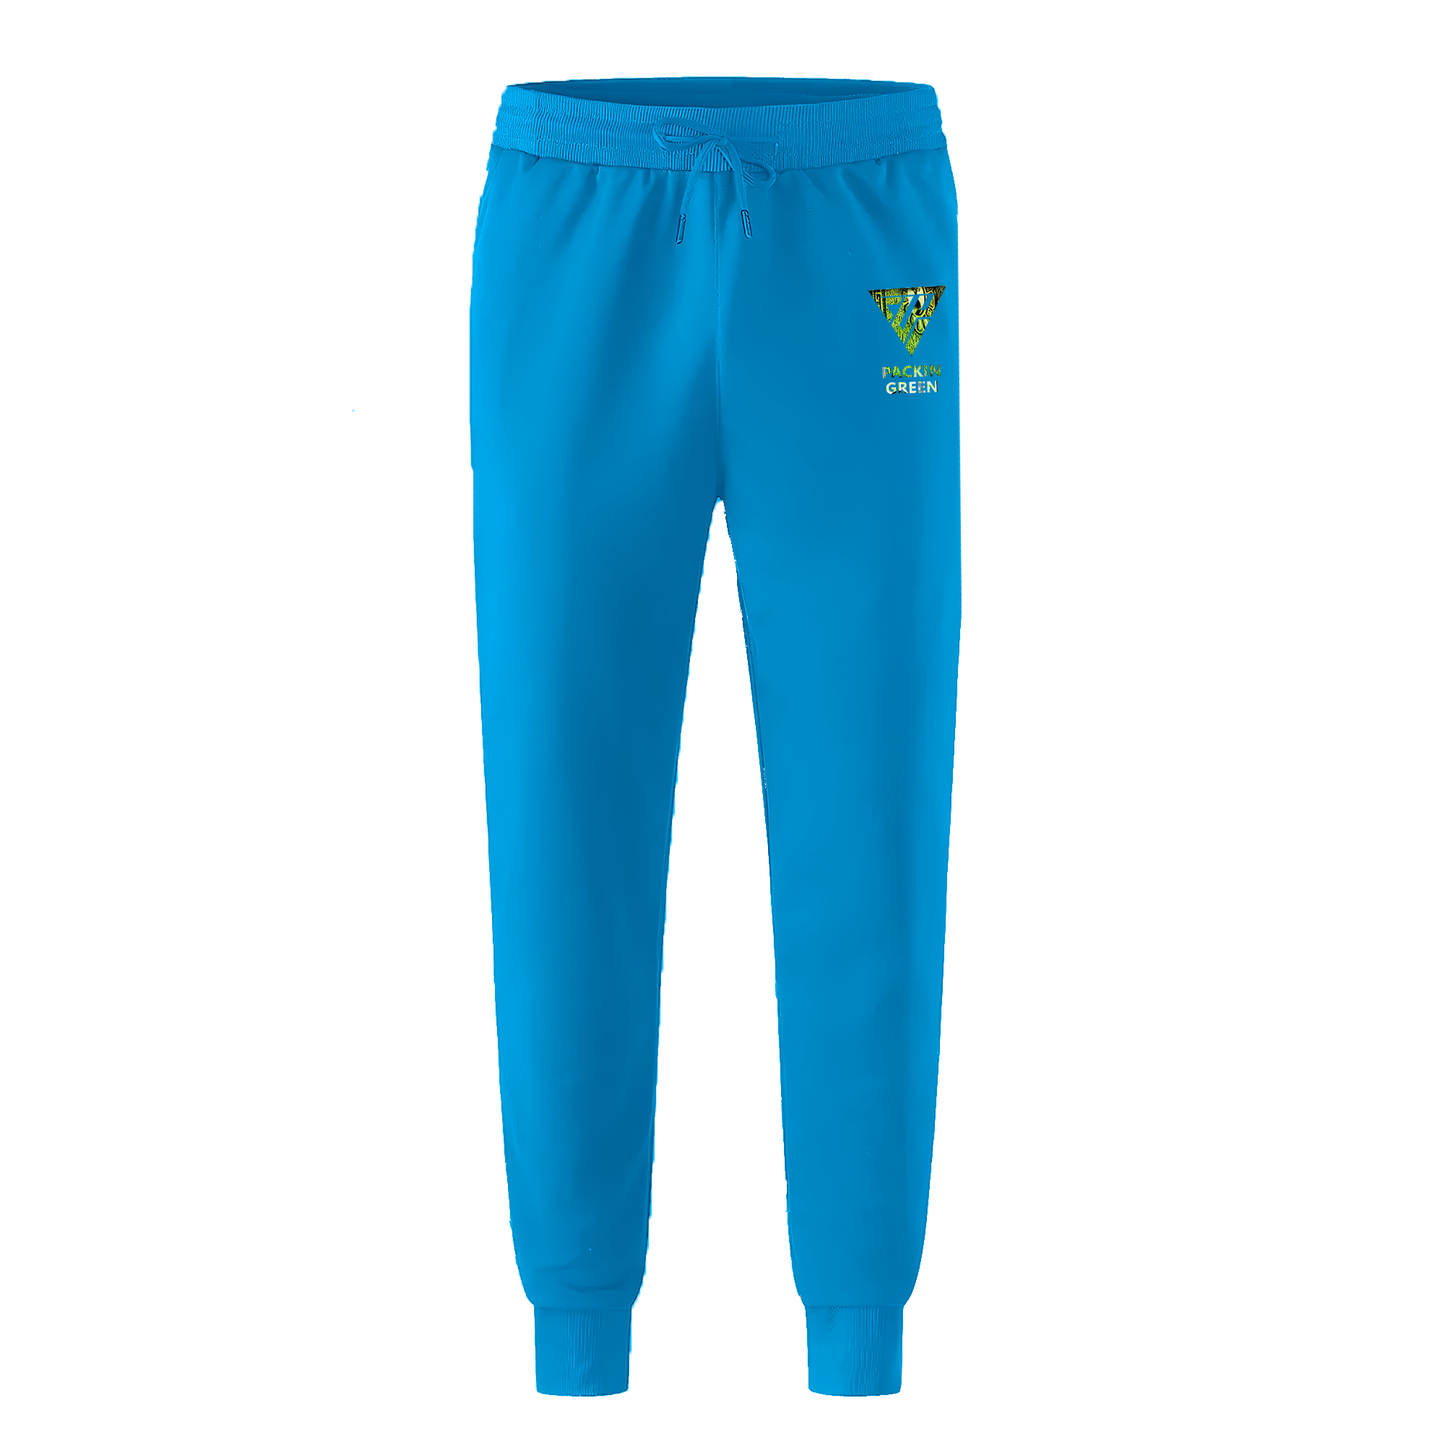 Packin Green Sports Pants Sweatpants (Blue)